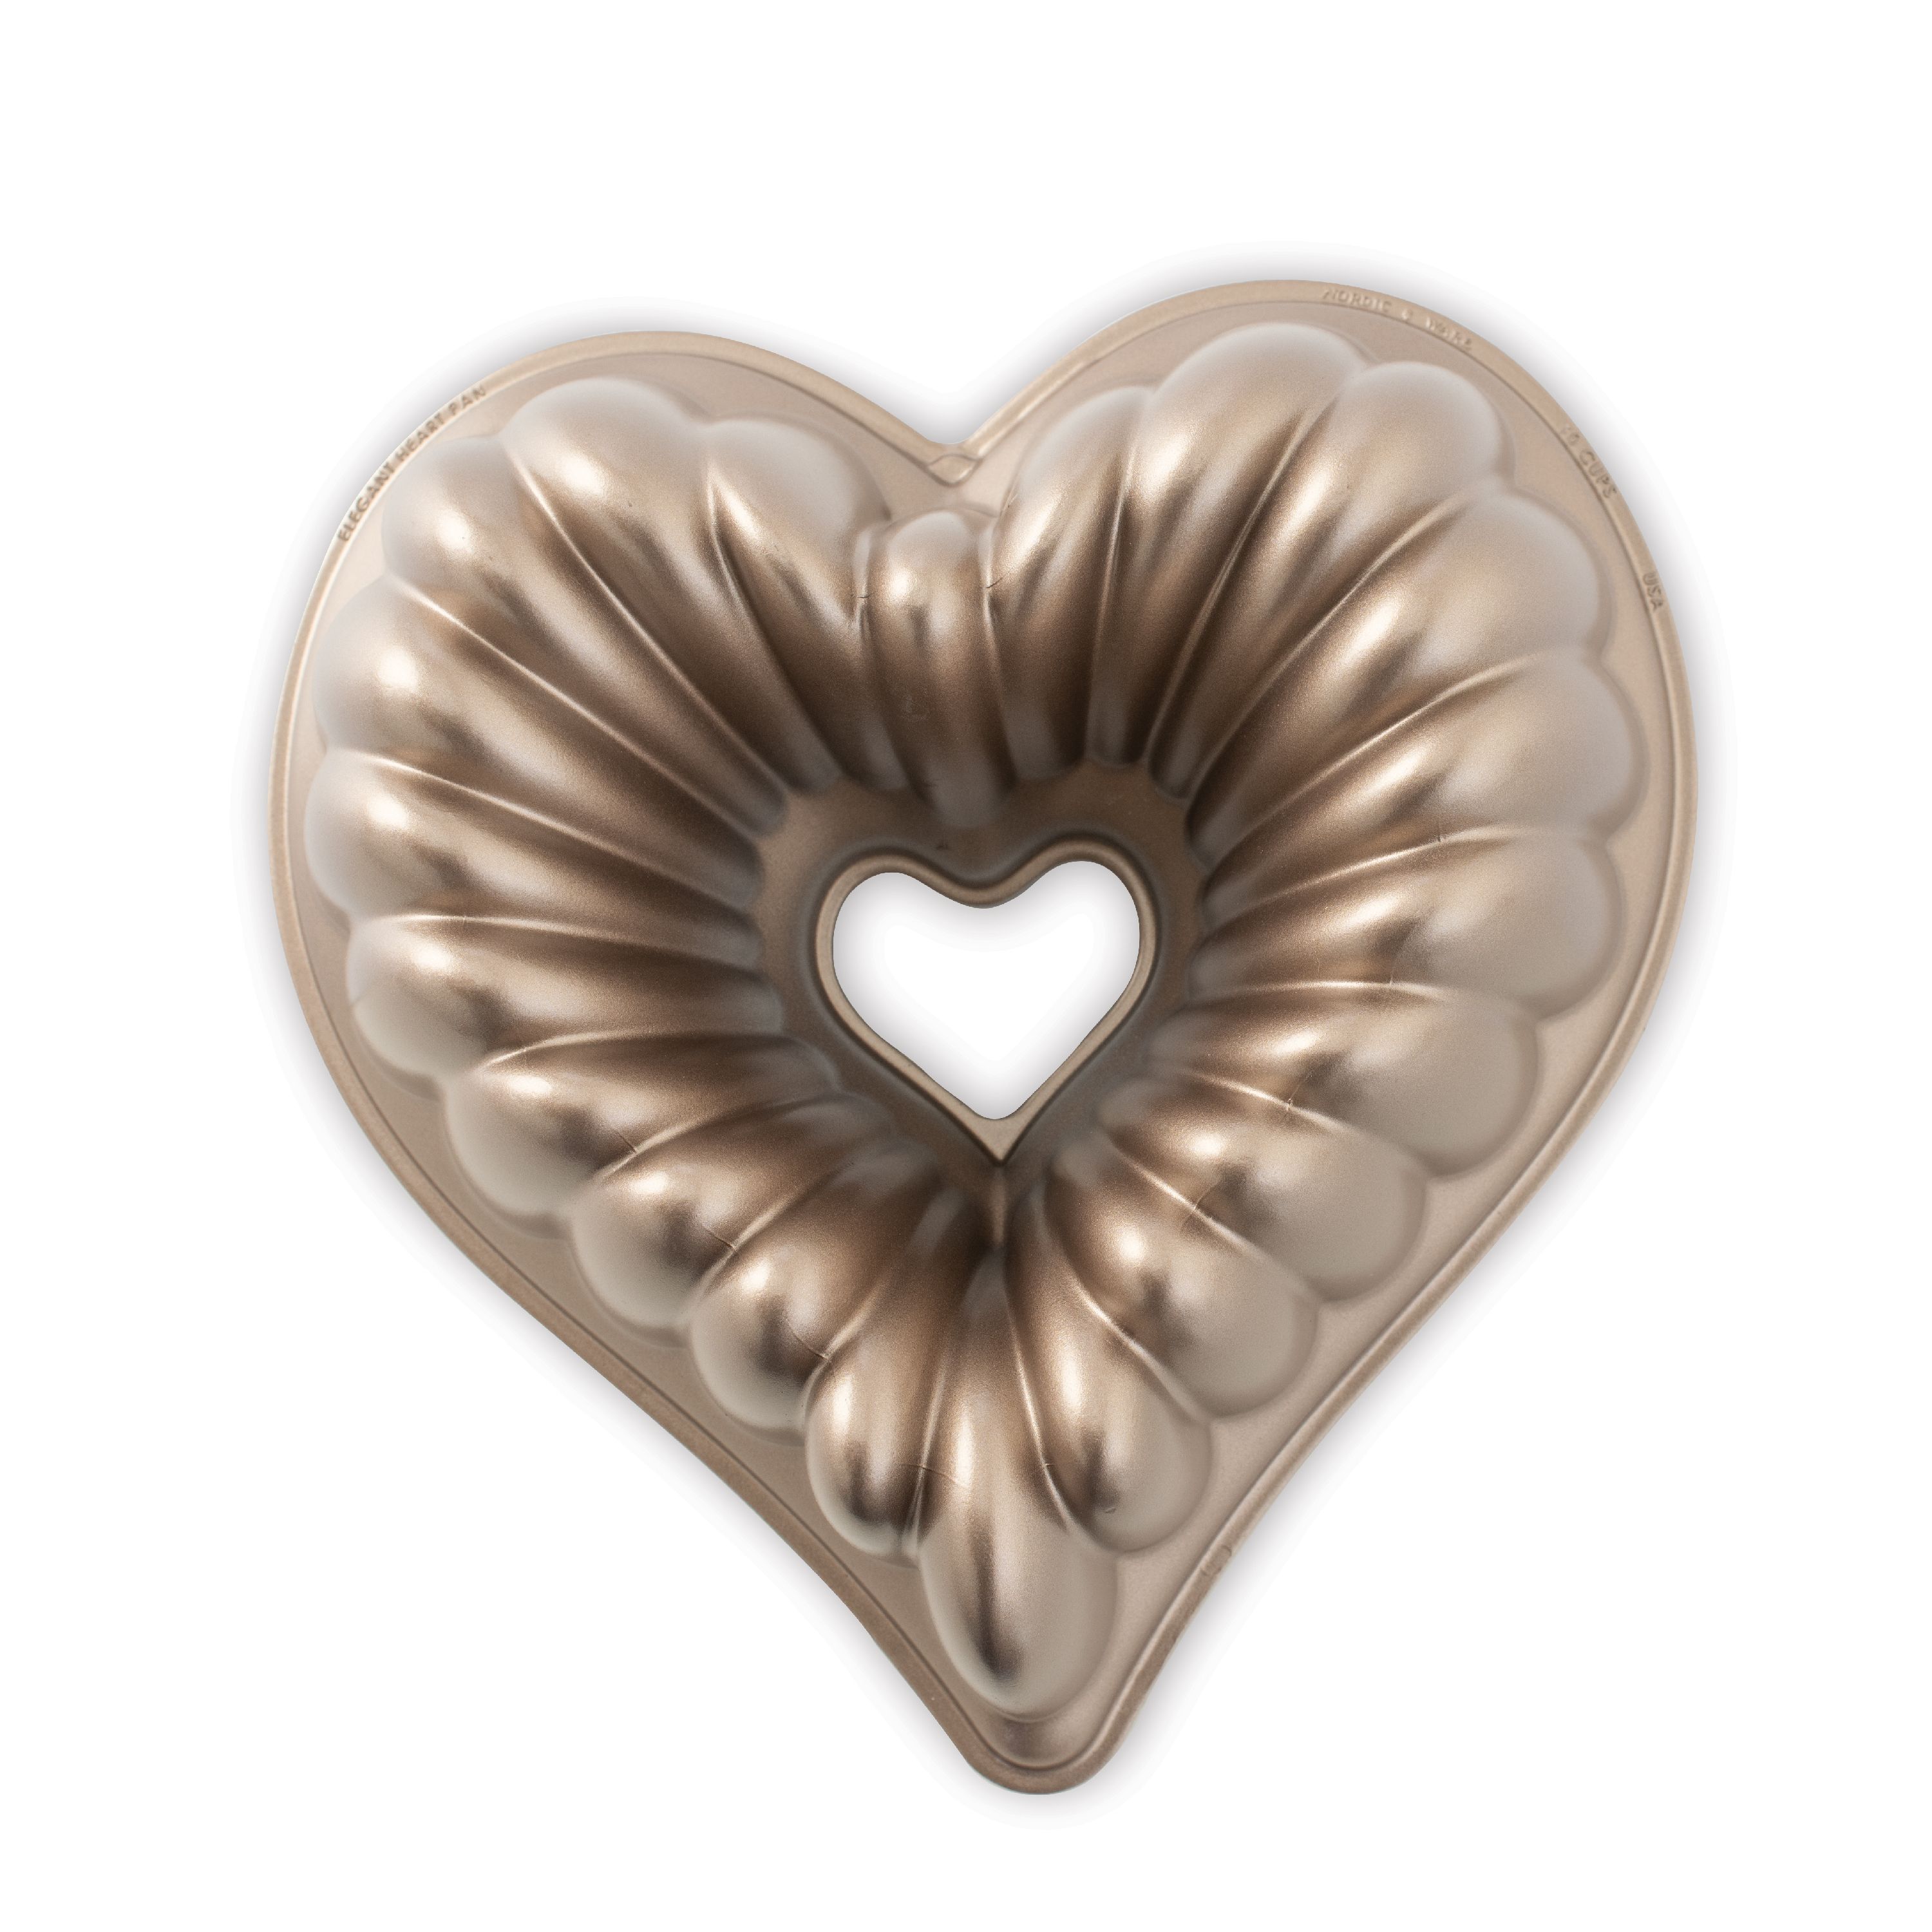 Nordic Ware Cast-Aluminum Elegant Heart Bundt Pan, Toffee, 10.5" x 10.9" x 3.6" - image 1 of 4